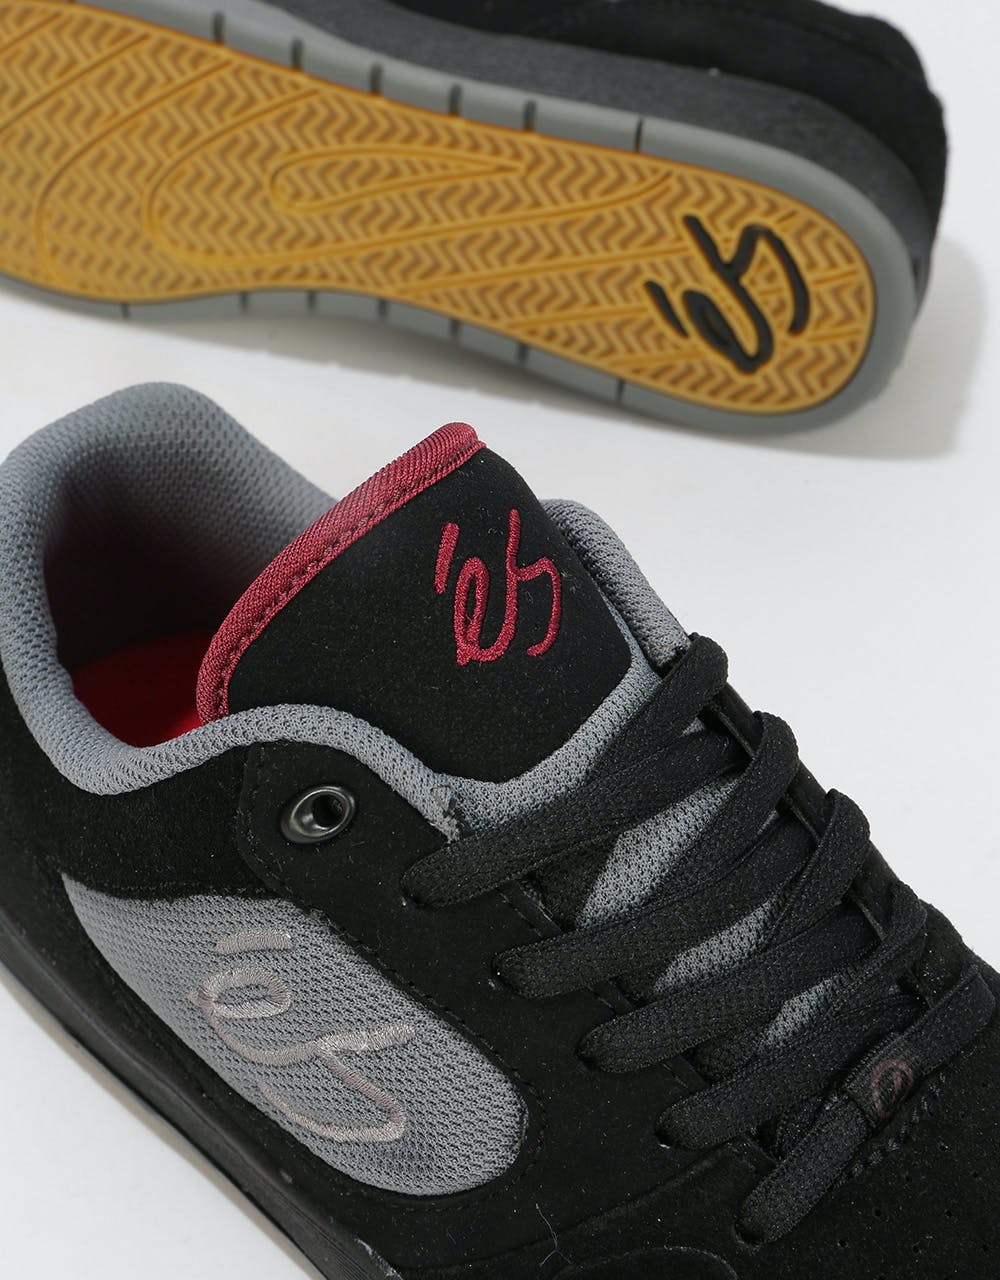 éS Swift 1.5 Skate Shoes - Black/Grey